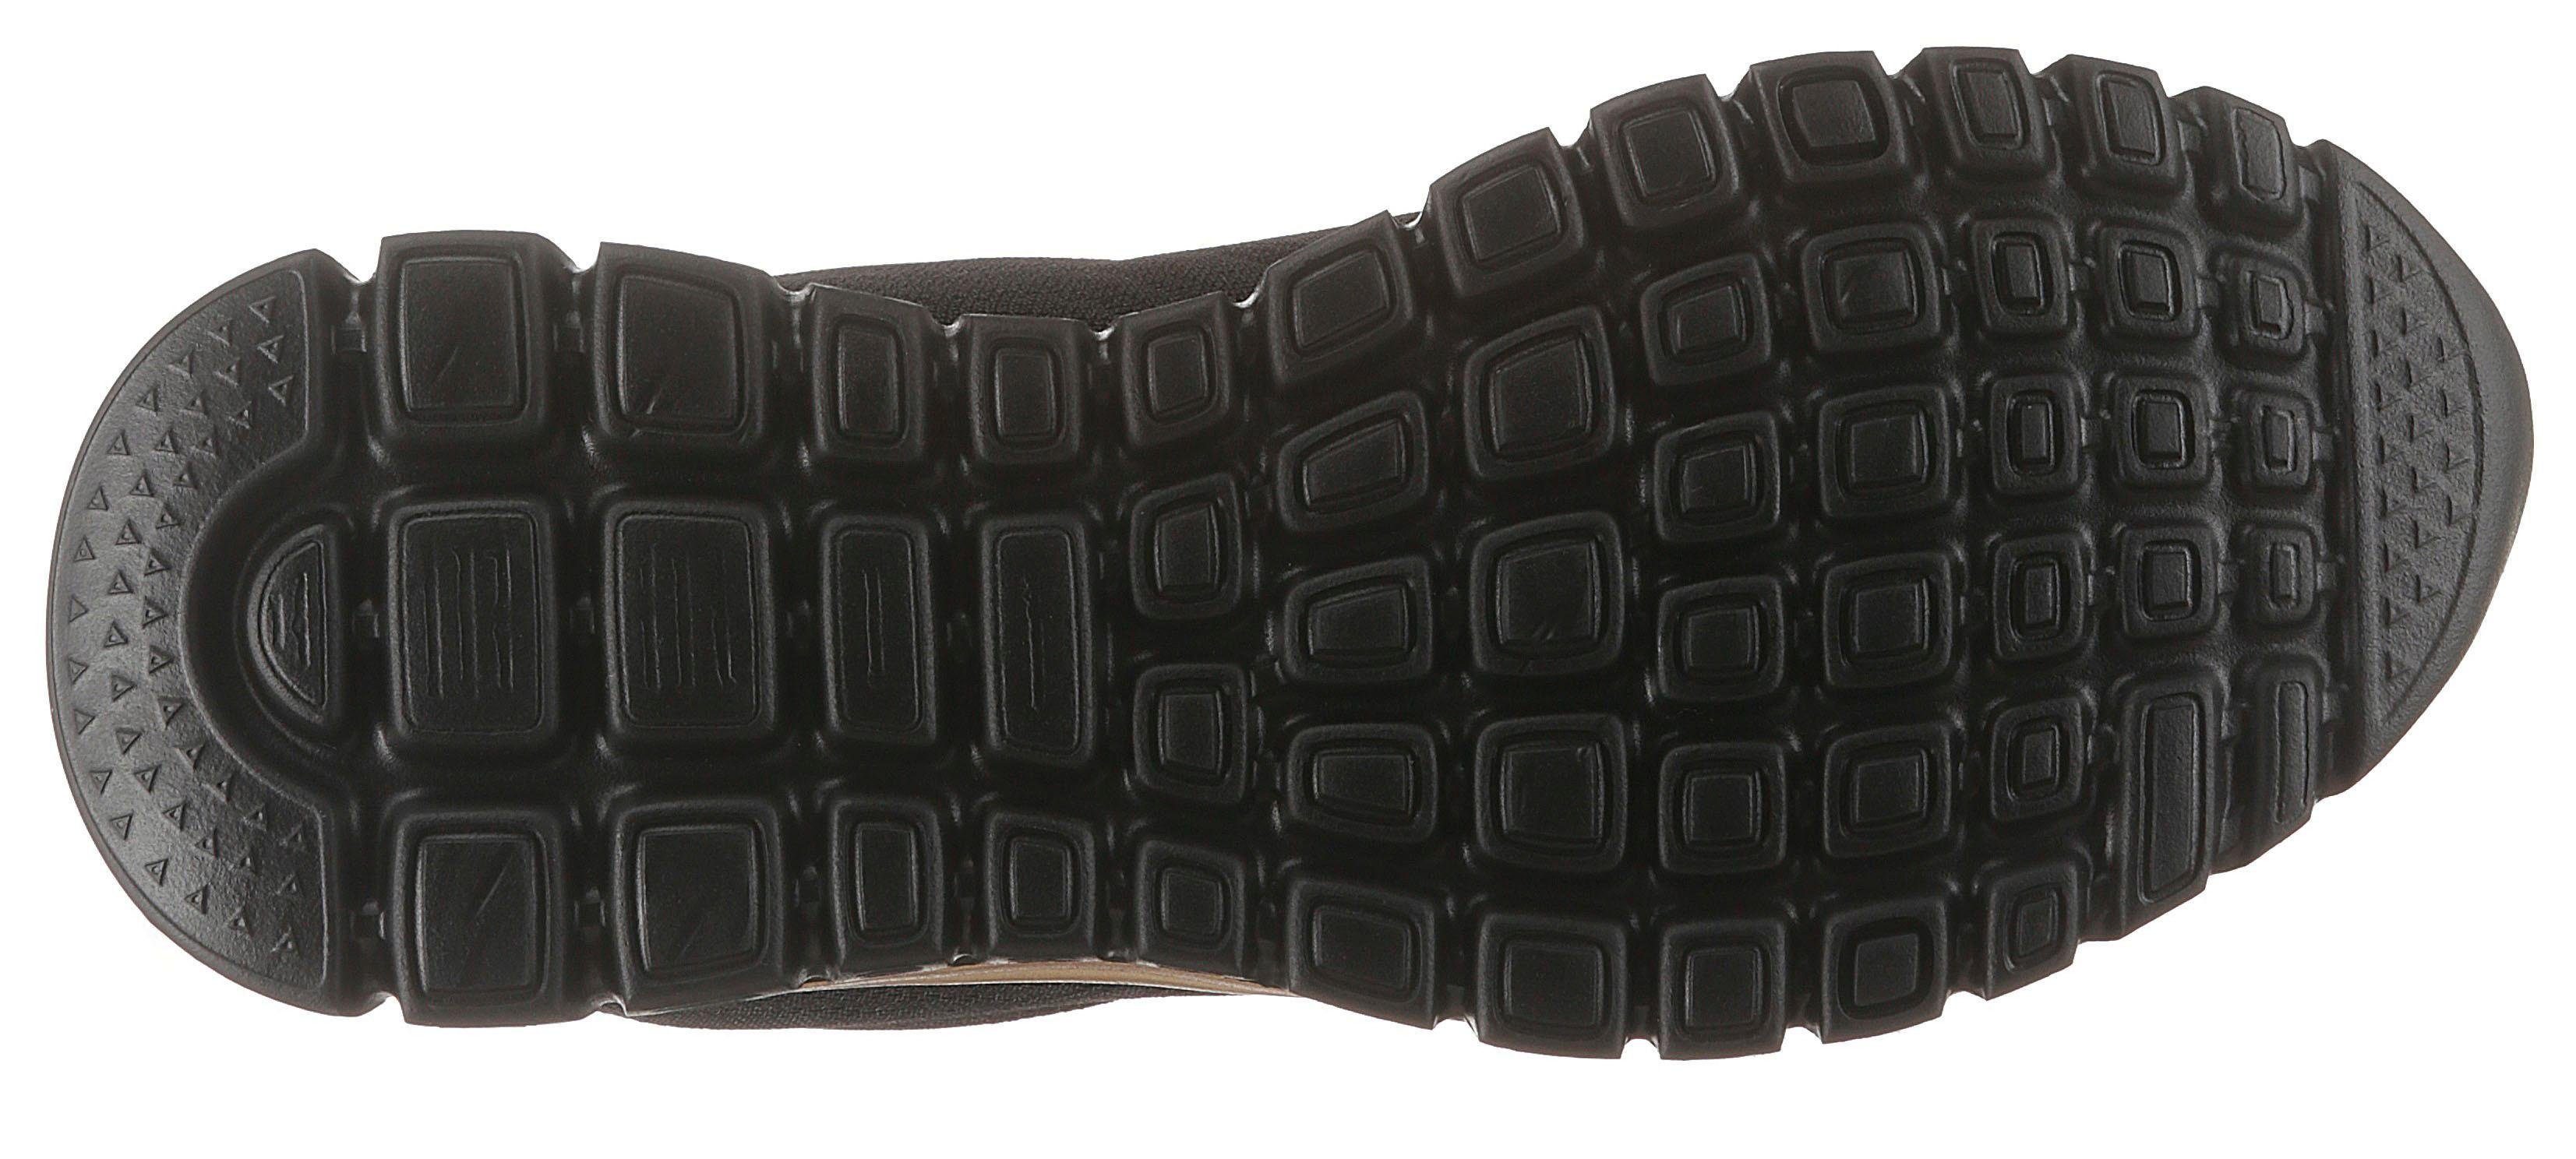 Connected Sneaker mit Graceful Foam Skechers Get Memory schwarz-goldfarben - Dämpfung durch